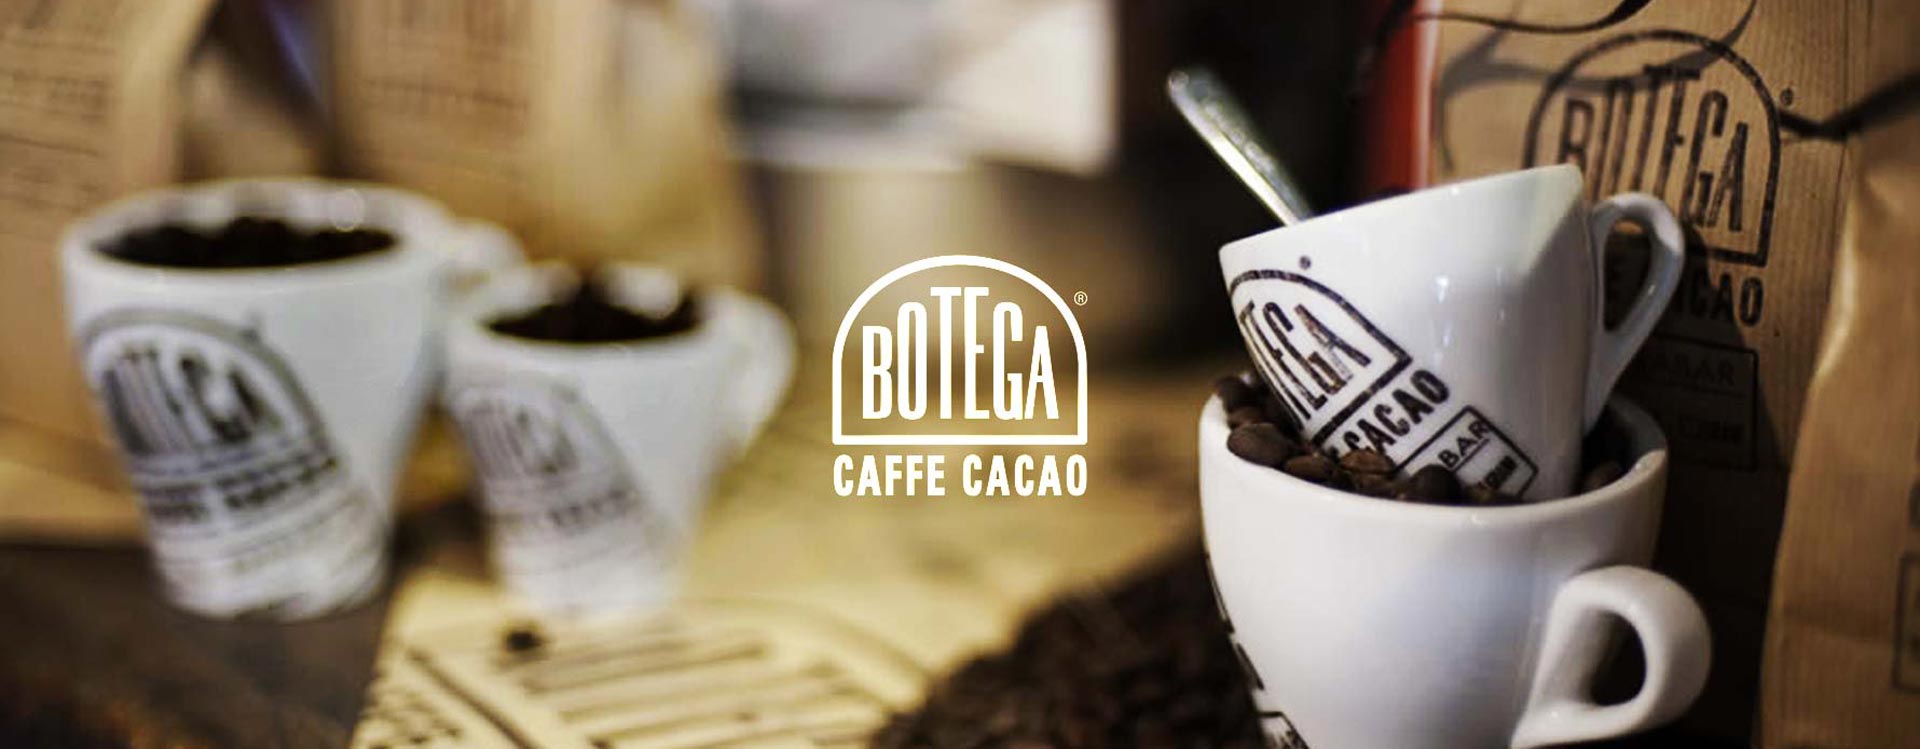 Botega Caffè Cacao - Case history Unique